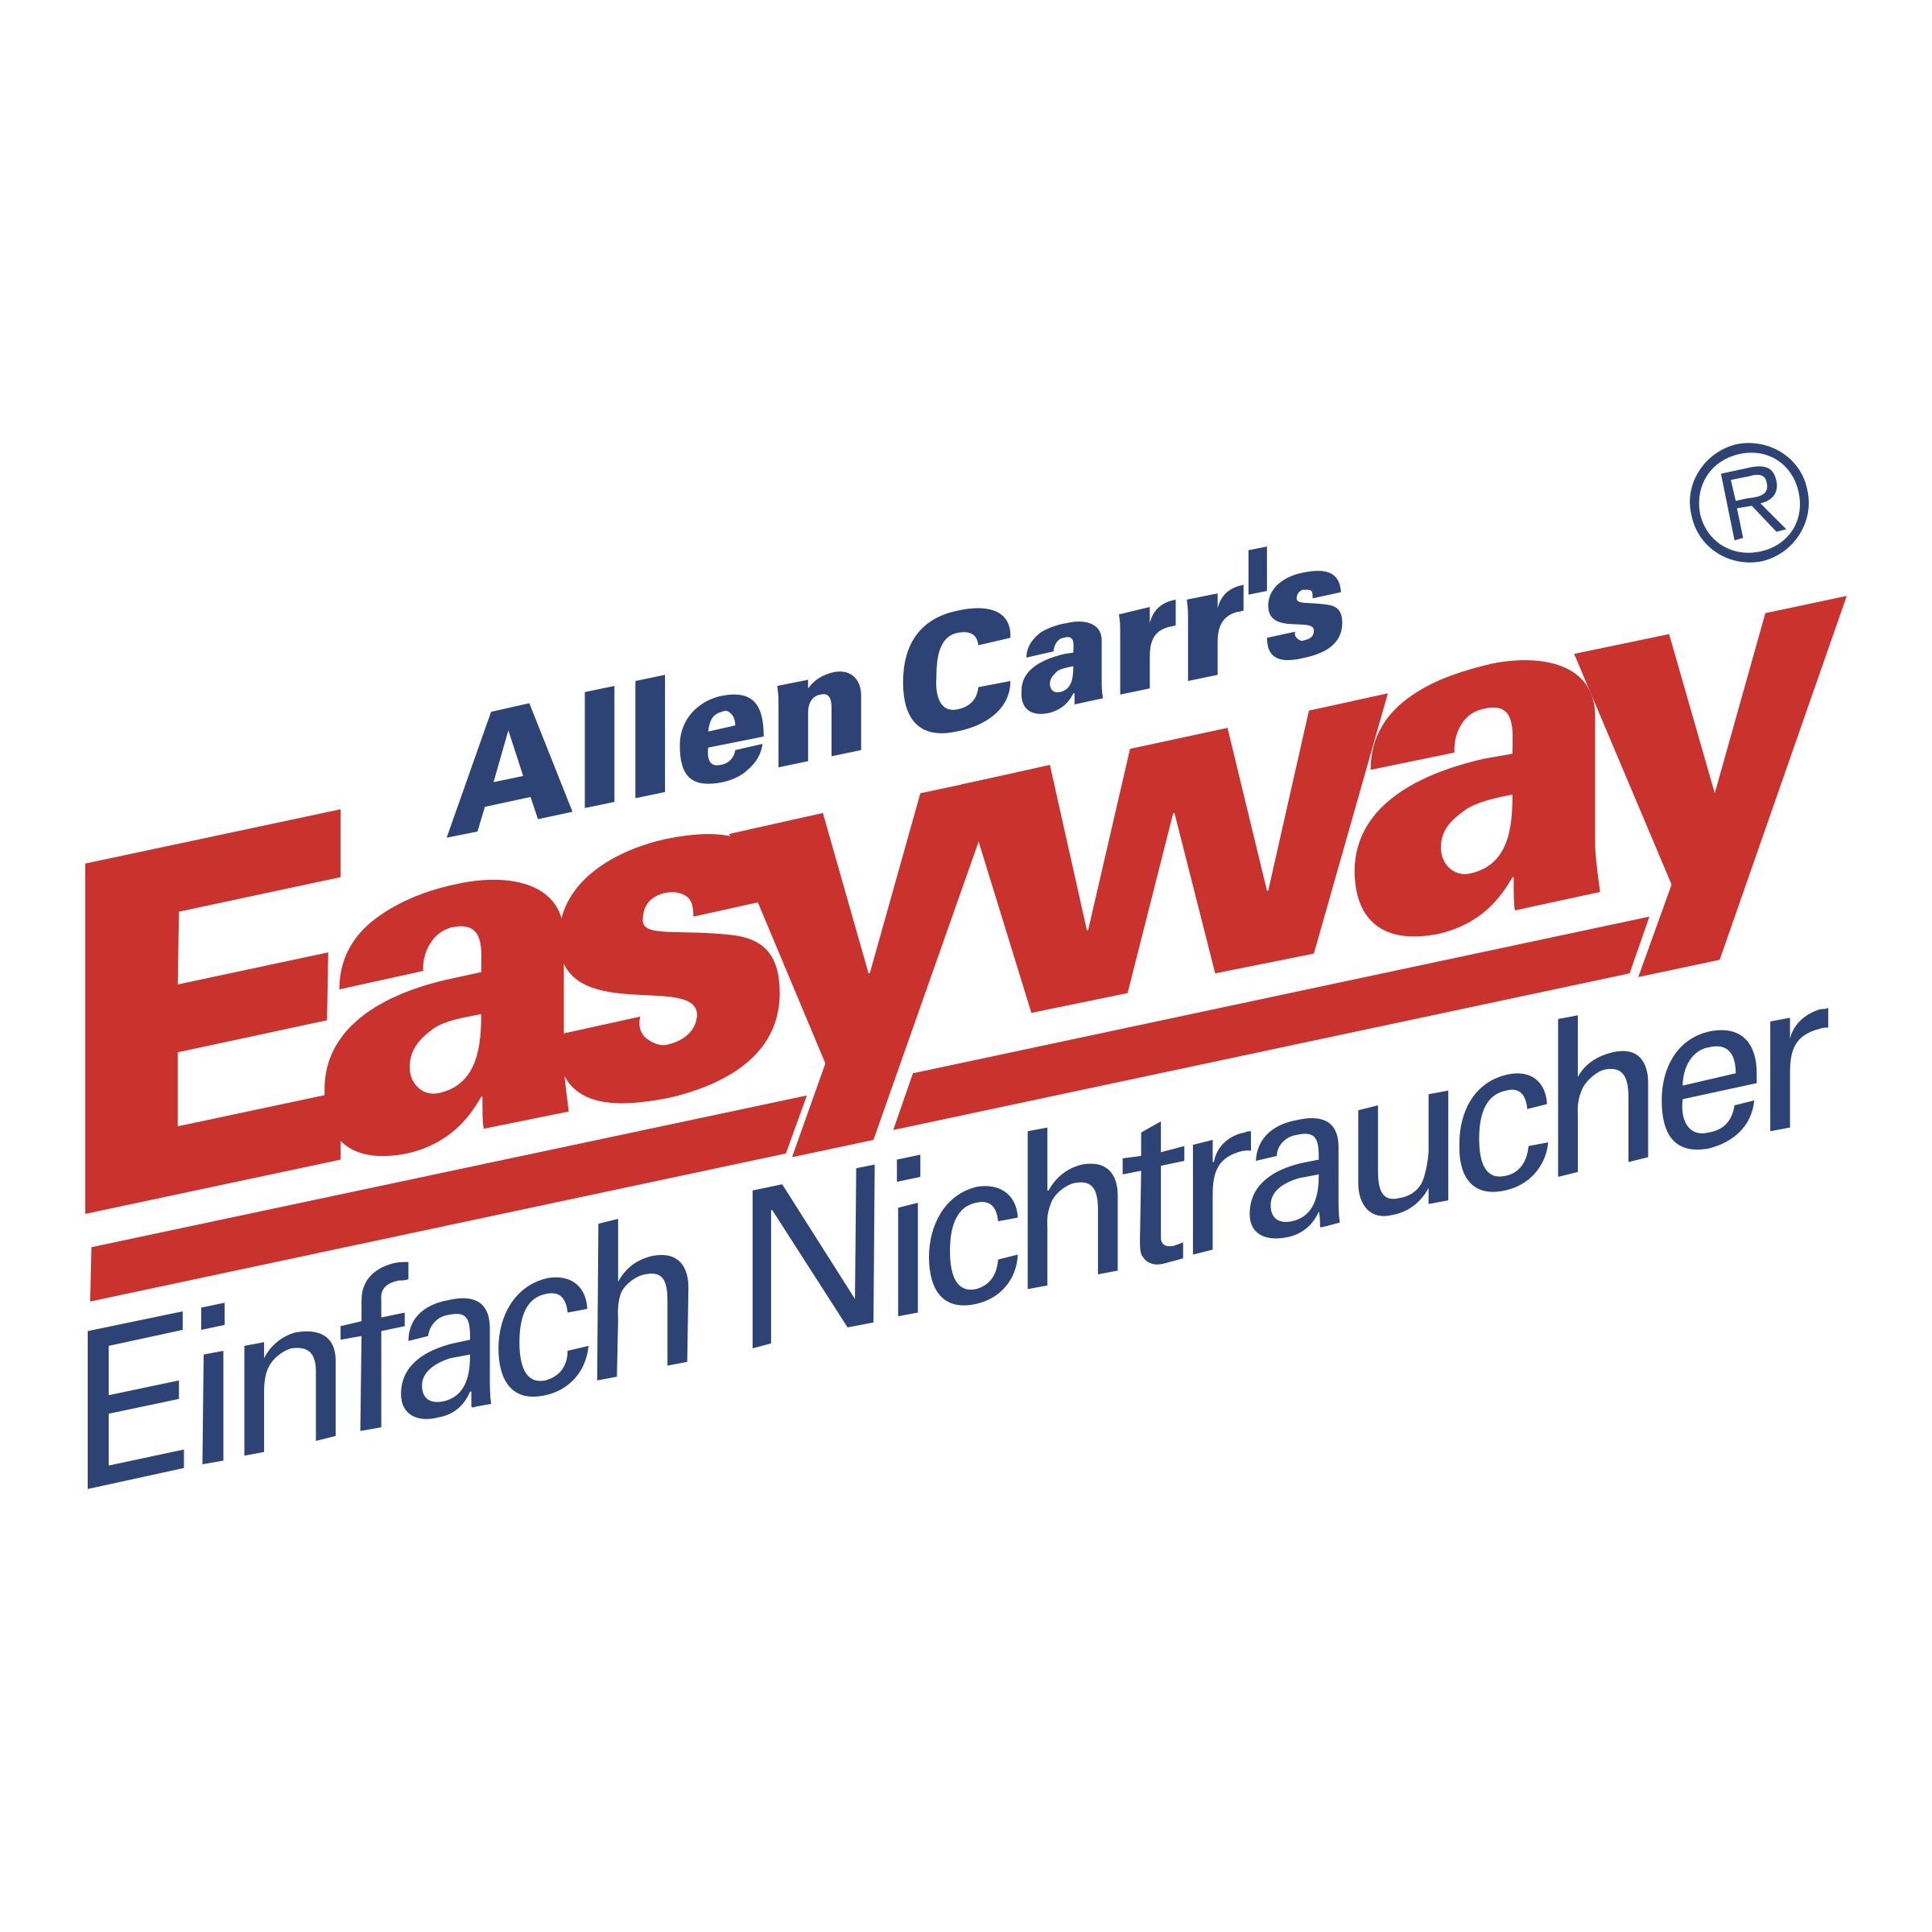 Carr's Logo - Allen Carr's Easyway 01 Logo PNG Transparent & SVG Vector - Freebie ...